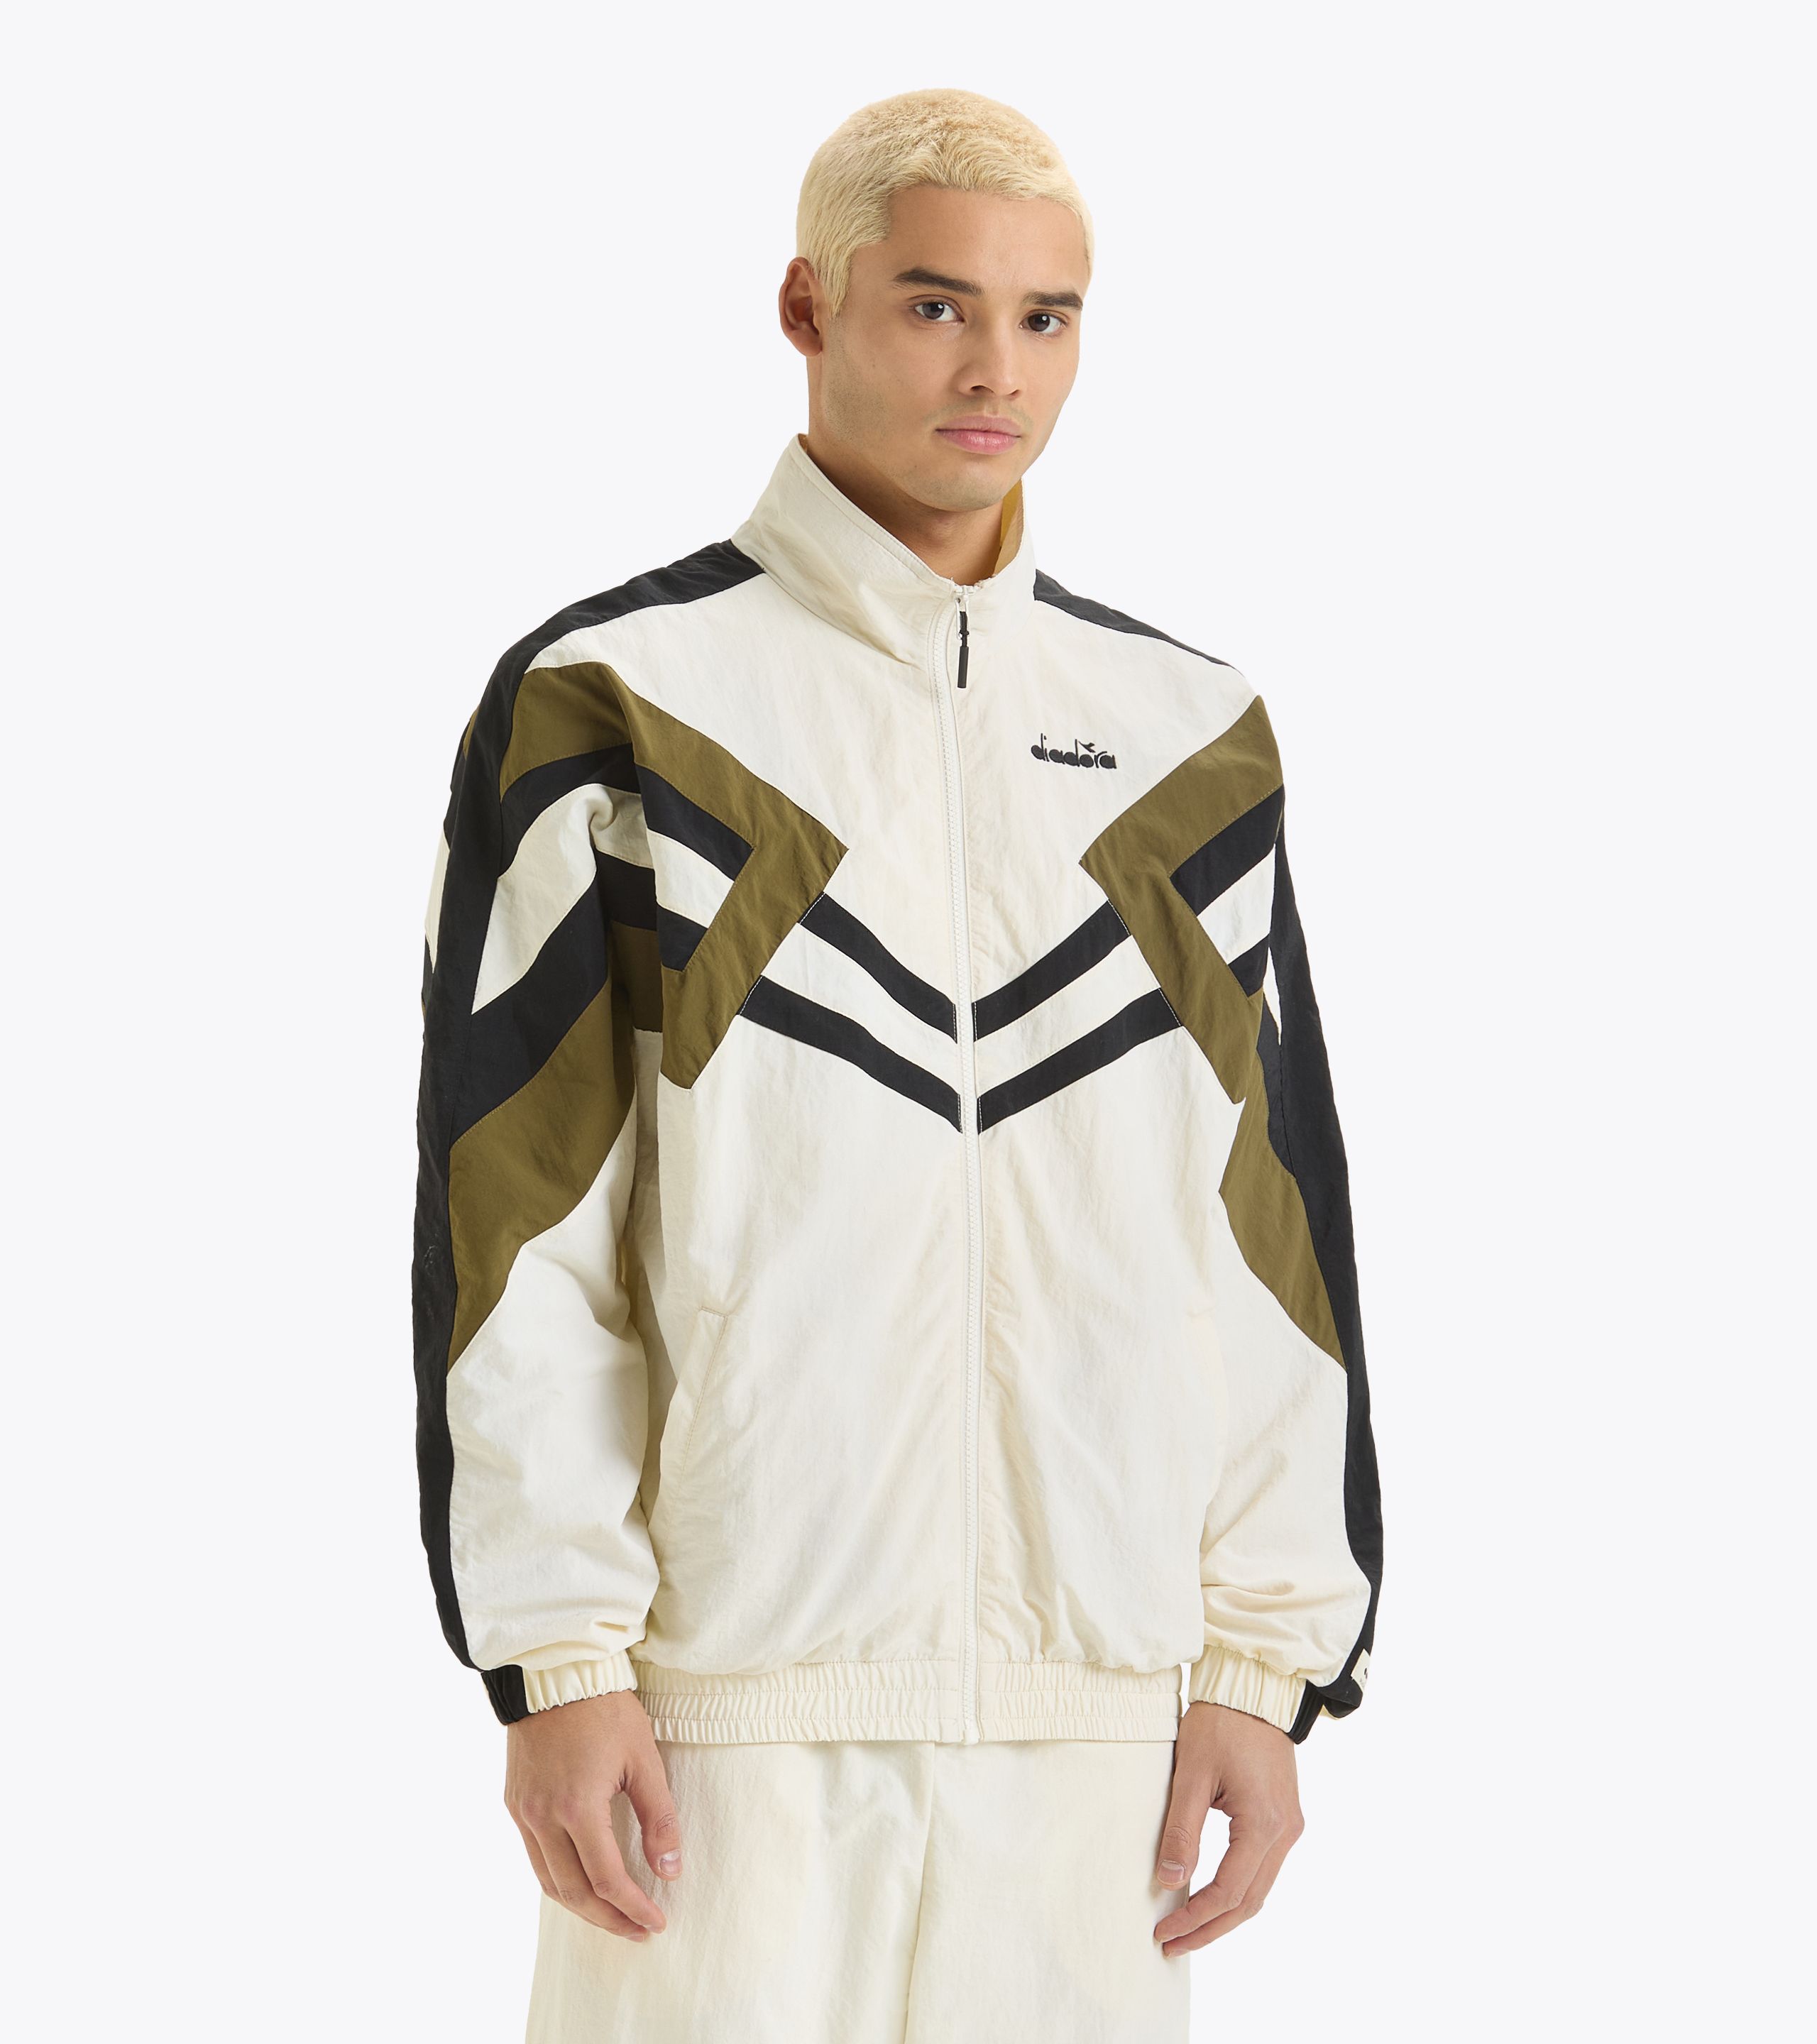 HOODIE FZ LEGACY Sporty hoodie - Made in italy - Gender Neutral - Diadora  Online Store